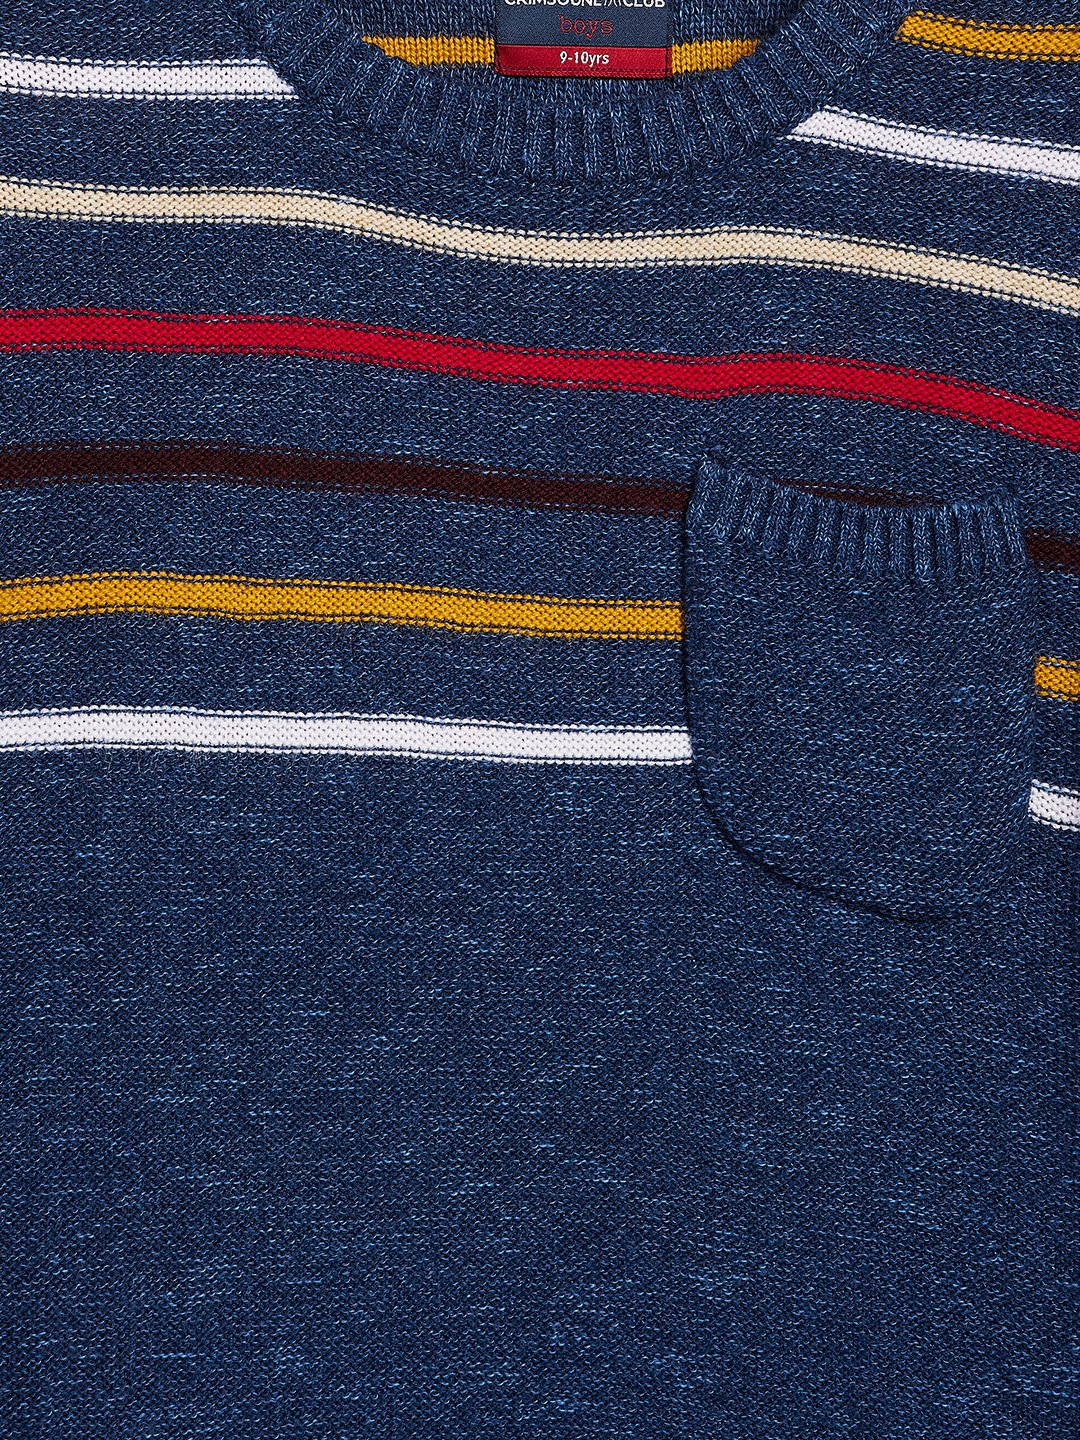 Blue Striped Round Neck Sweater - Boys Sweaters